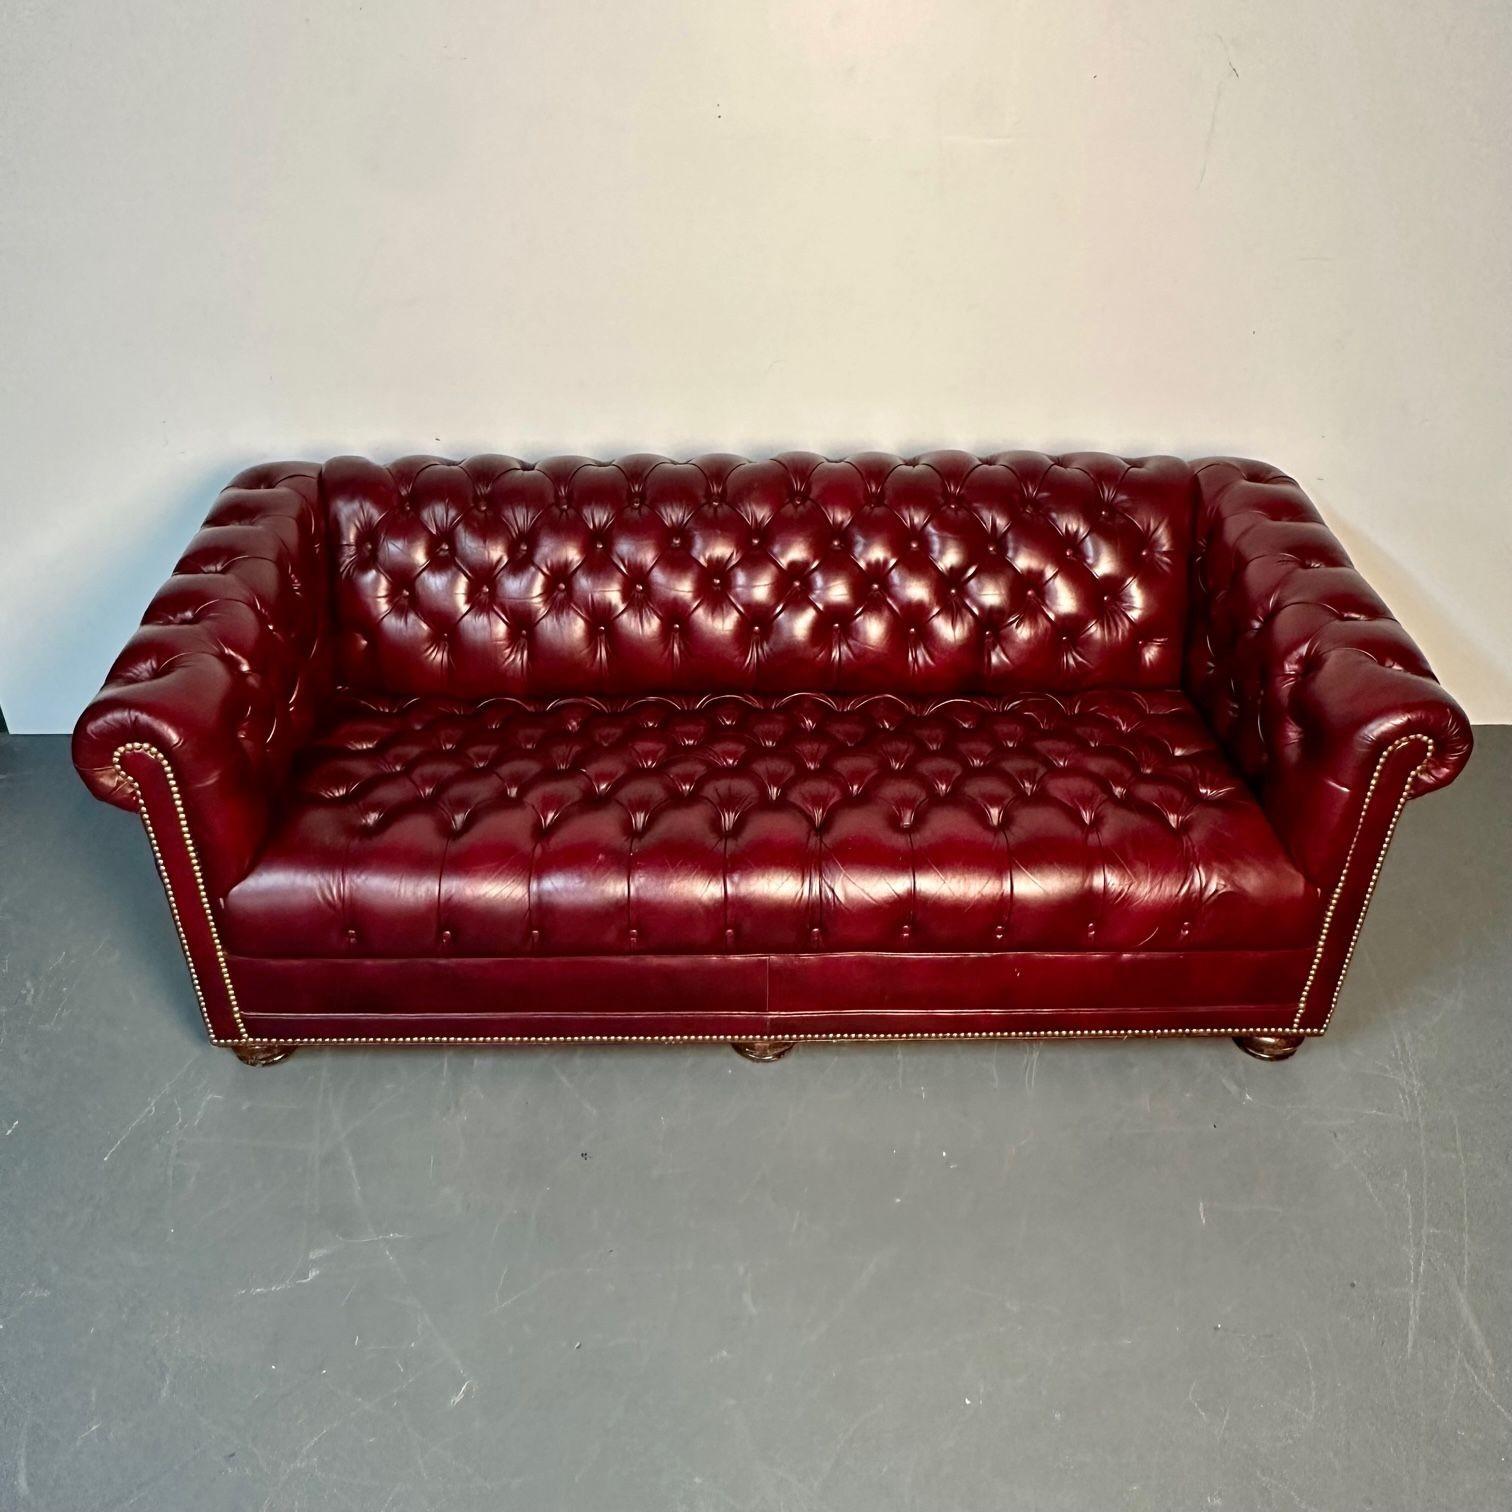 American Georgian Oxblood Red Leather Chesterfield Sofa / Settee, Tufted, Bun Feet